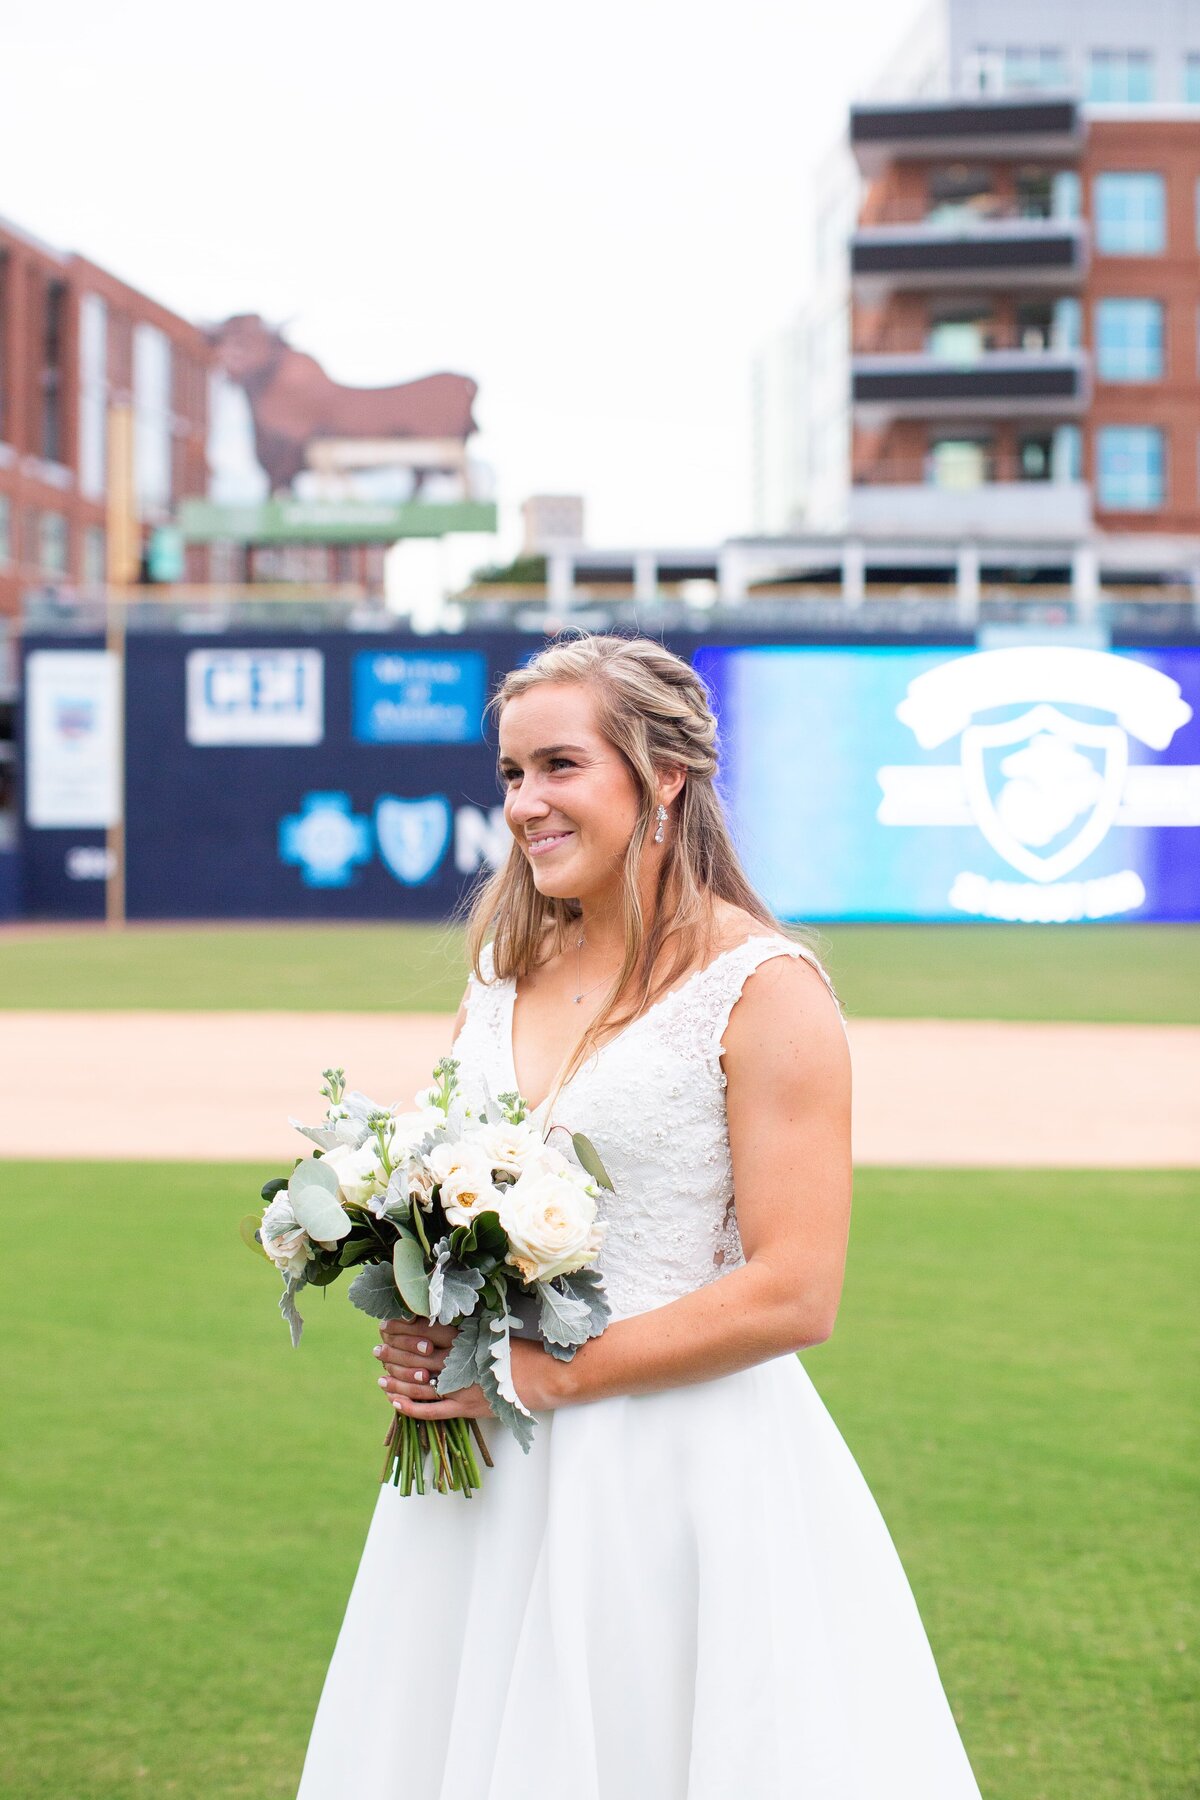 bride-baseball-field